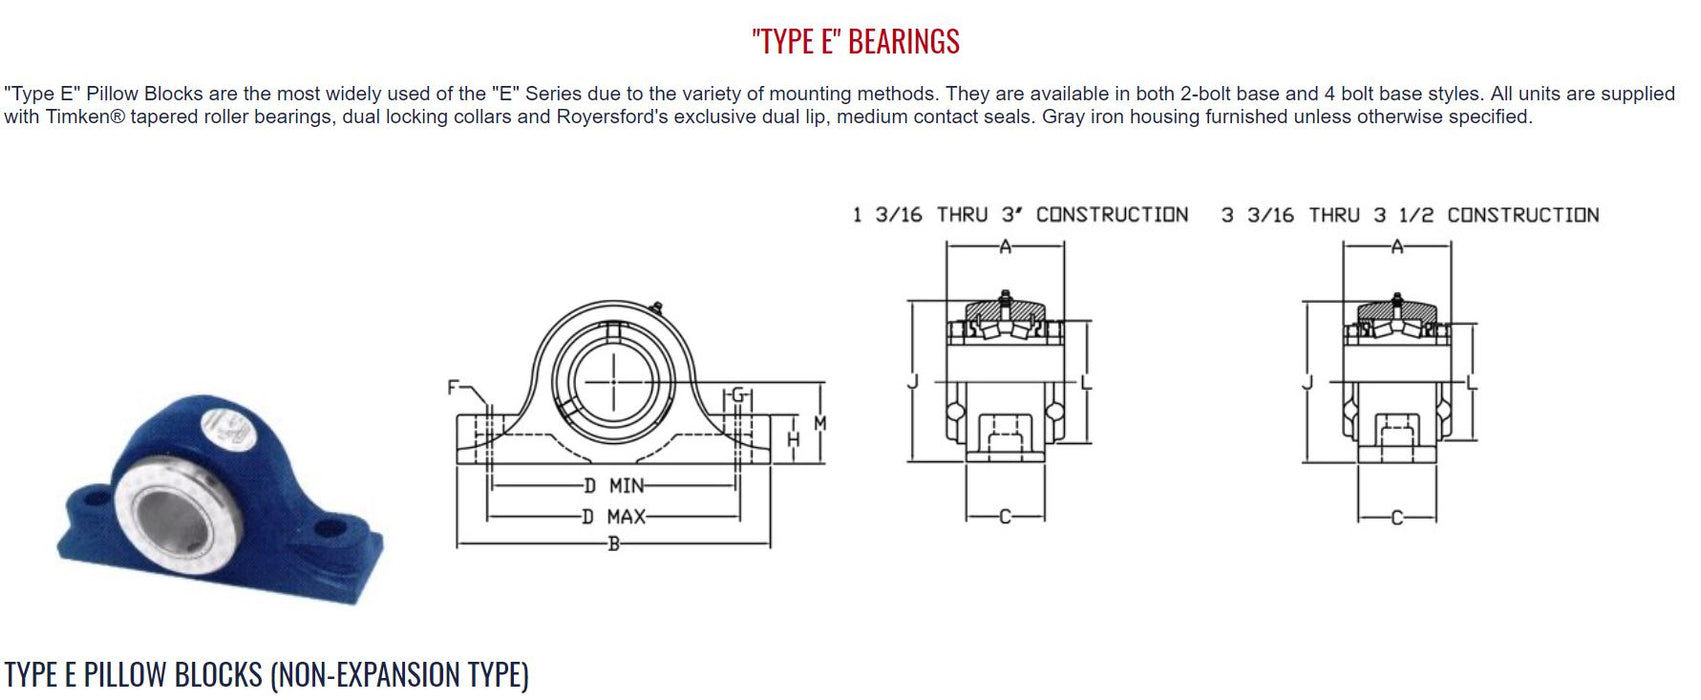 20-02-0107, Royersford TYPE E Pillow Block Bearing, 1-7/16 with Timken Tapered Roller Bearings